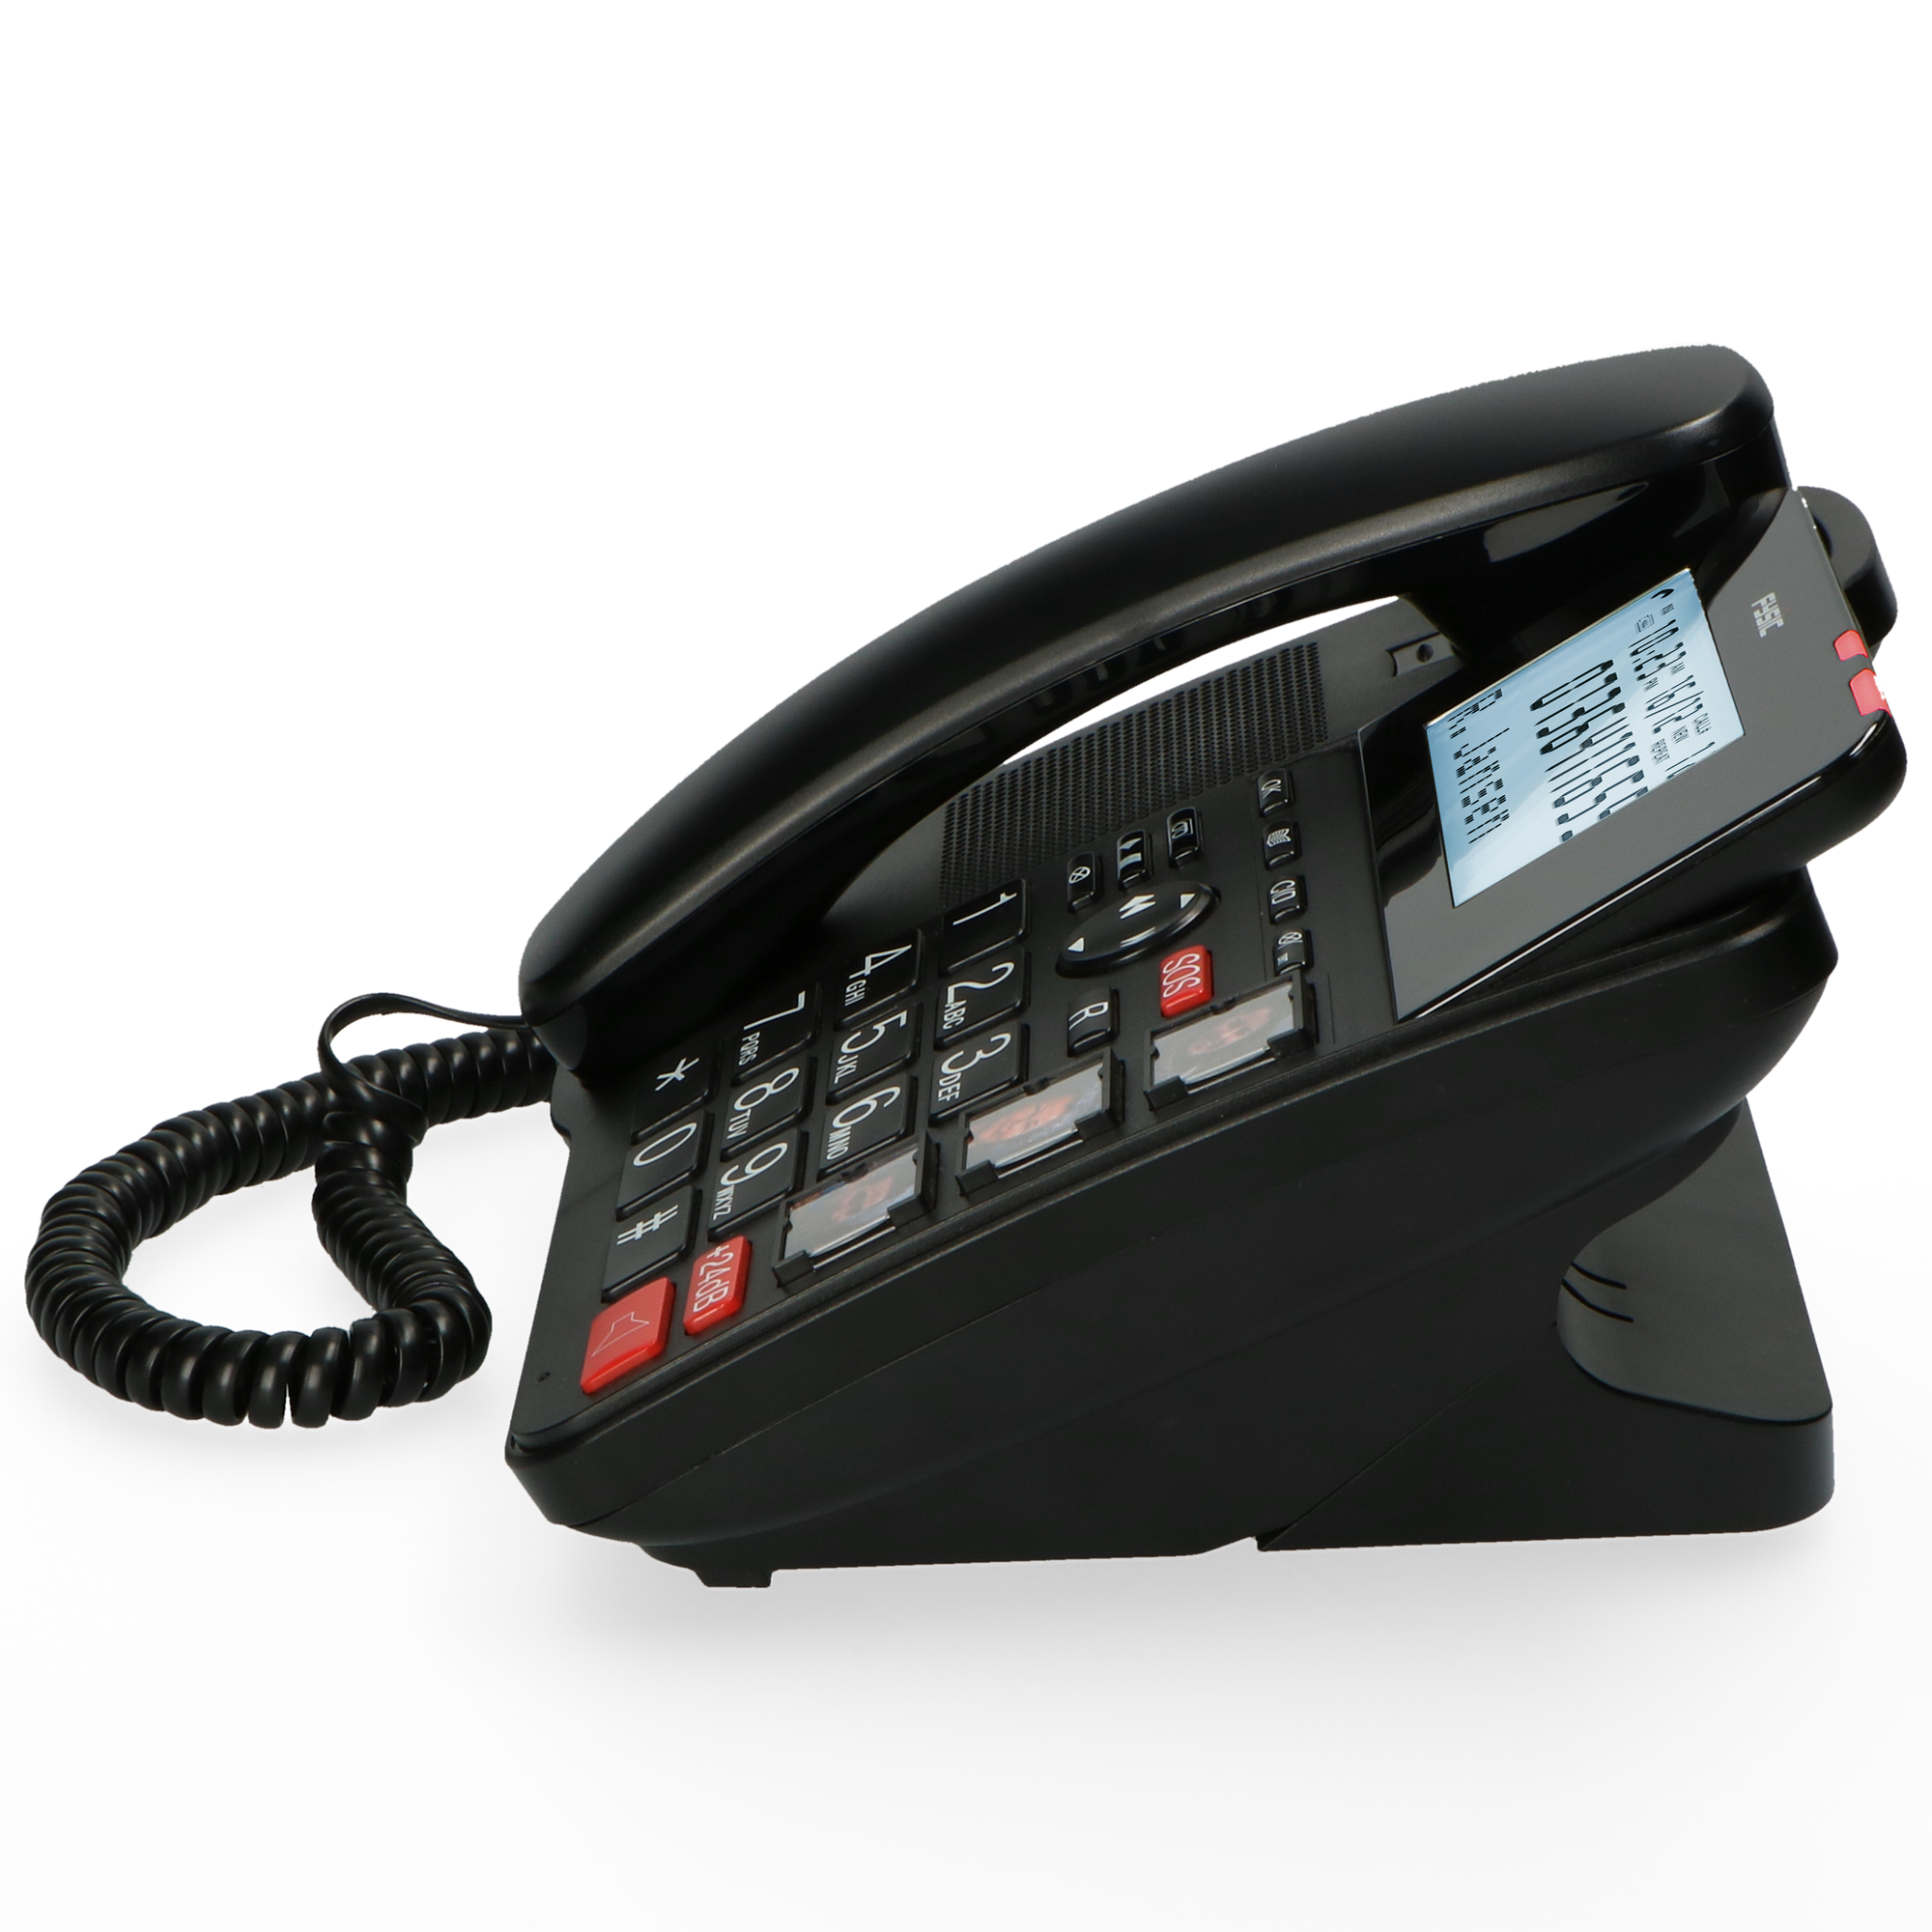 schnurgebundenes FX3960 Seniorentelefon - FYSIC Funk-Panikknopf mit